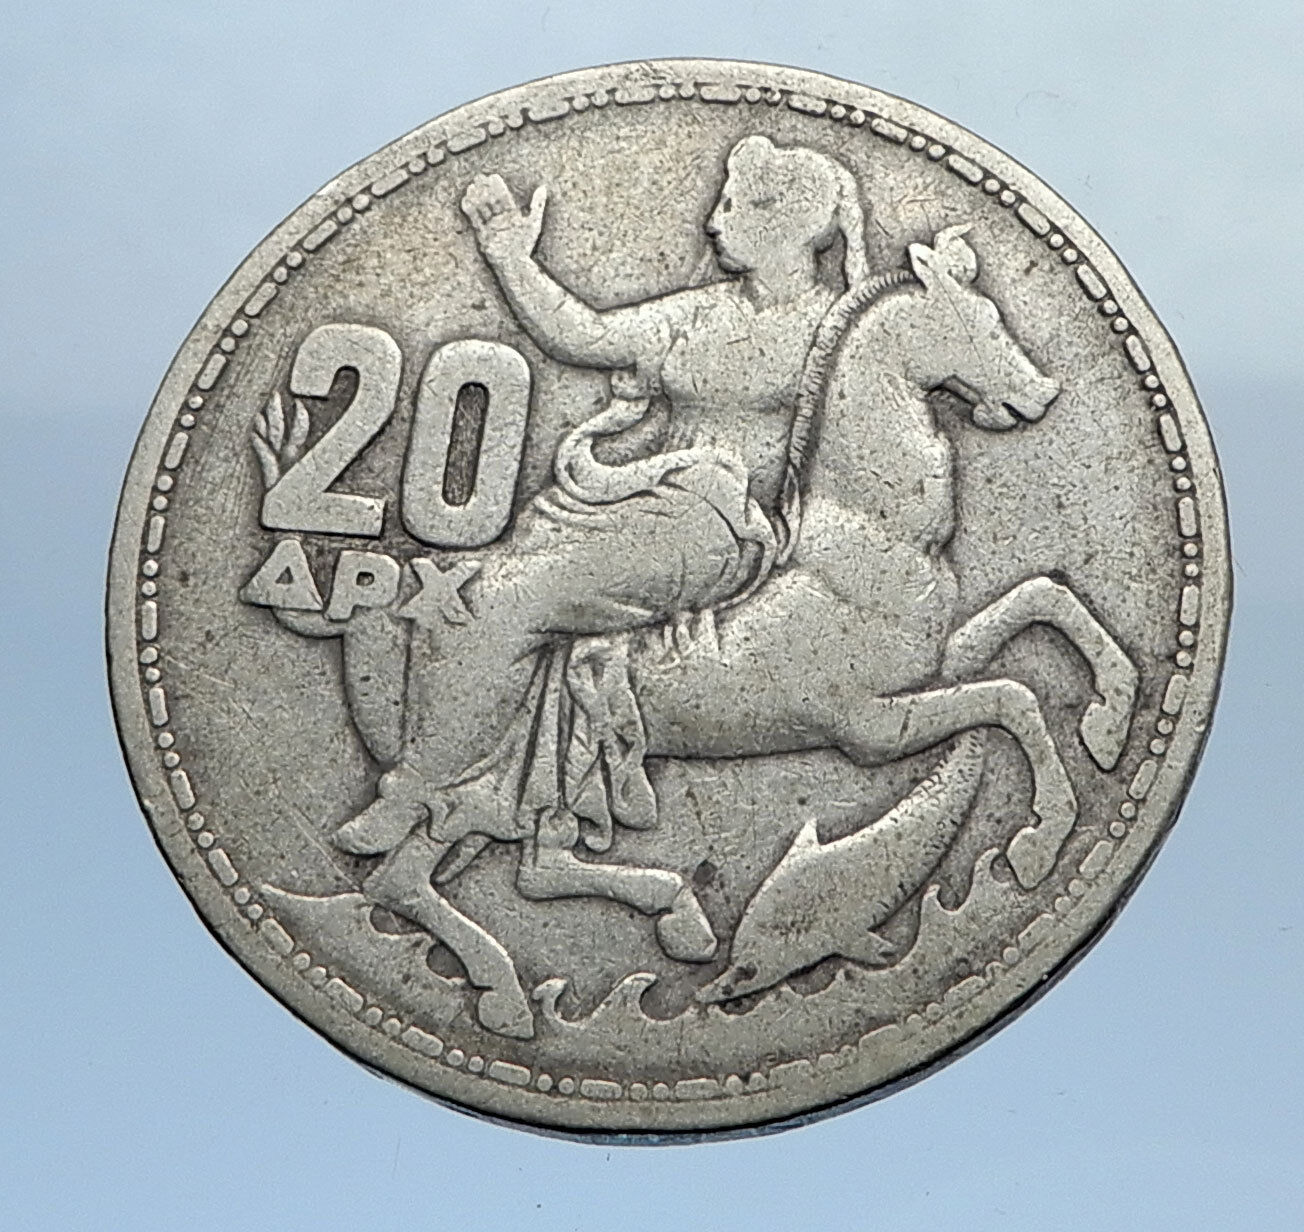 1960 GREECE King PAUL I Silver 20 Drachmai Coin SELENE DIANA MOON GODDESS i69896